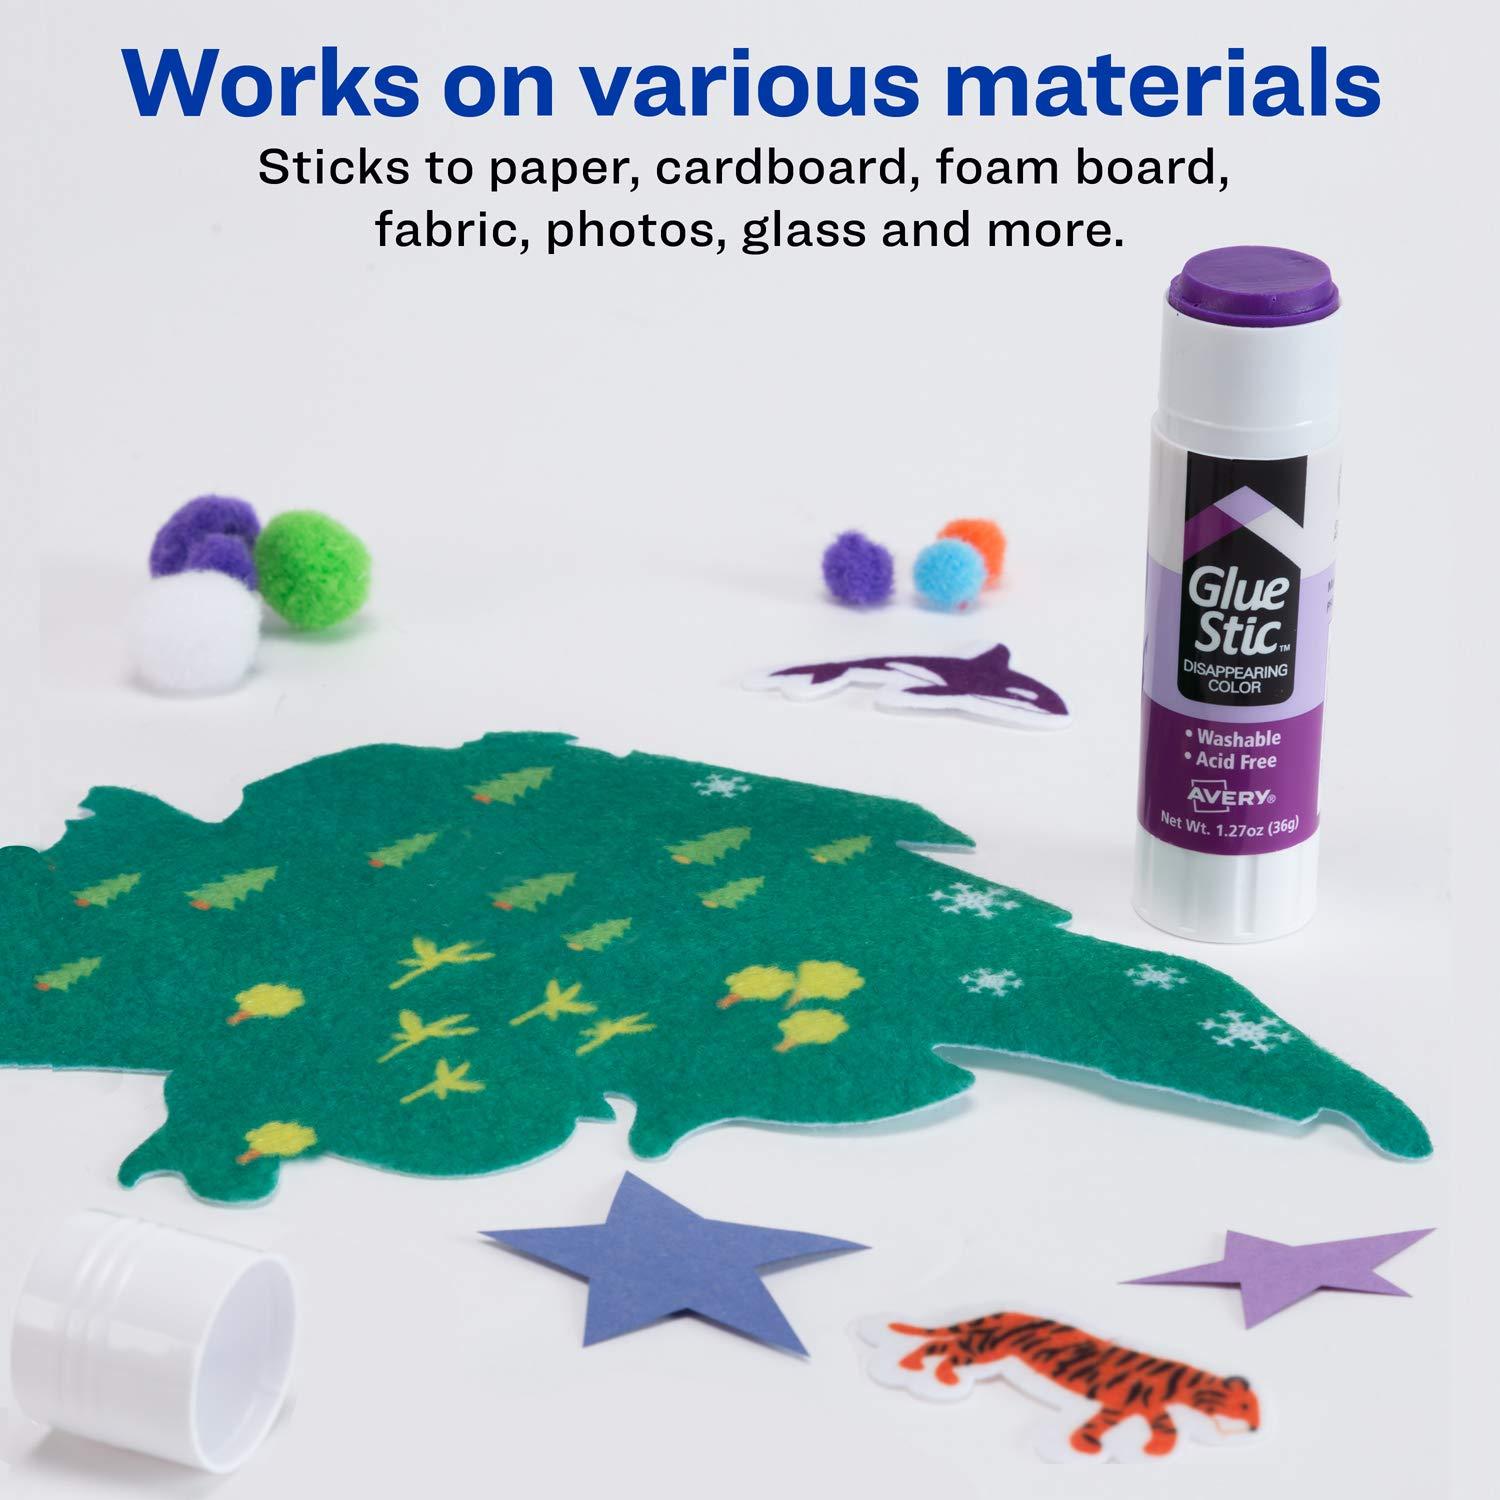 Avery Glue Stick Disappearing Purple Color Washable Nontoxic 1.27 oz.  Permanent Glue Stic 6pk (98071) 6 pack